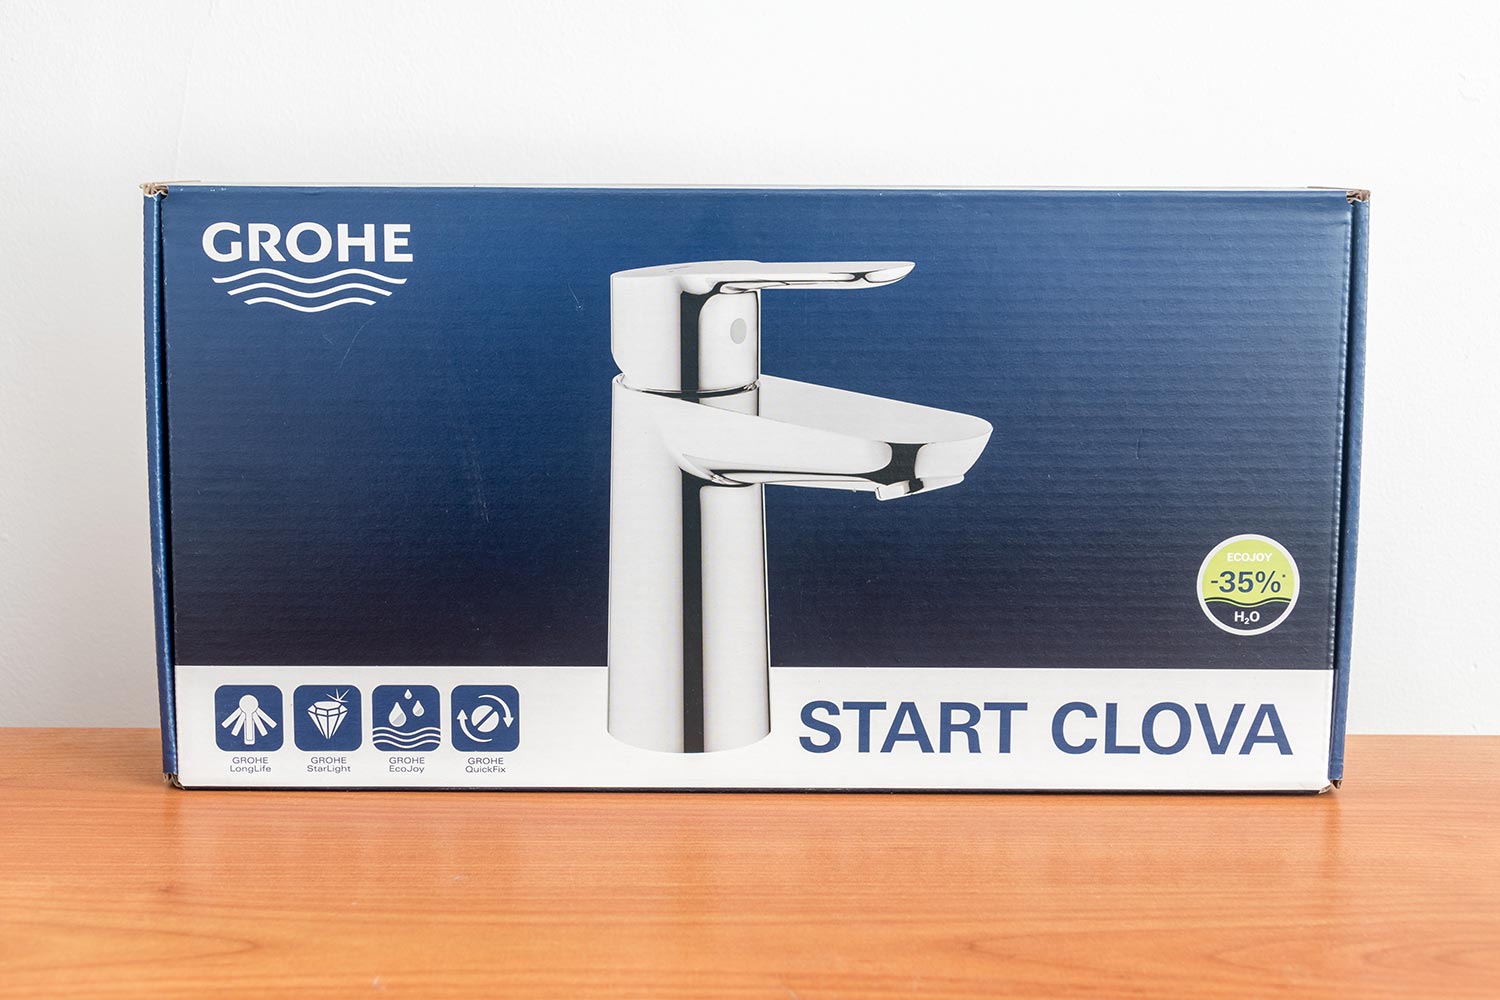 Grohe start clova water tap